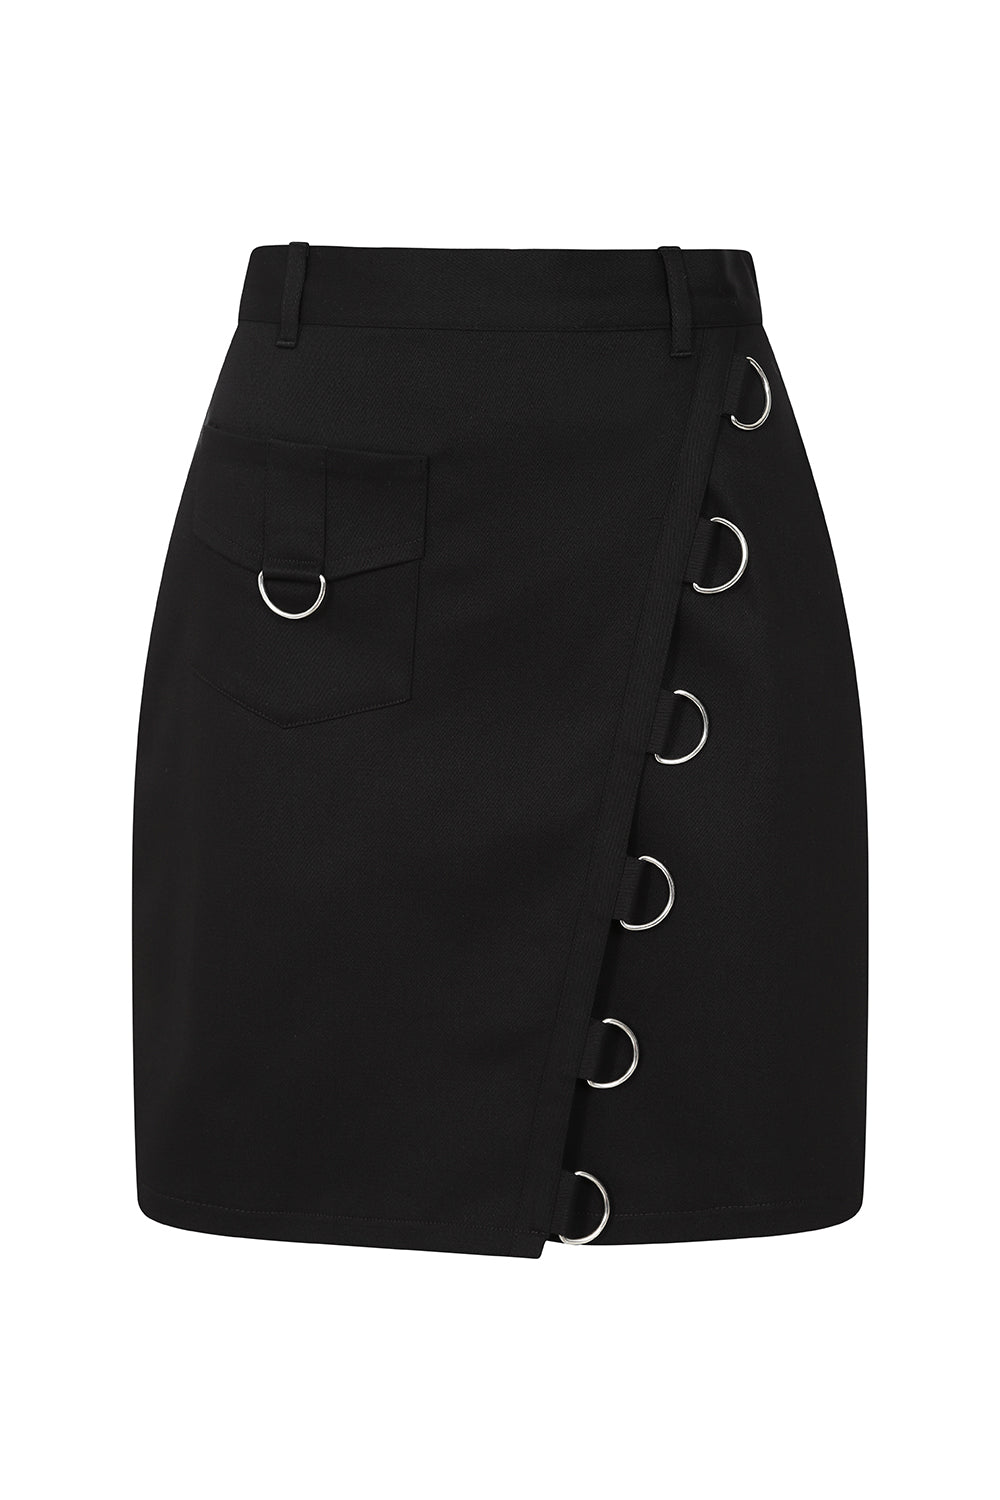 Hell Bunny Tifa Skirt - Kate's Clothing